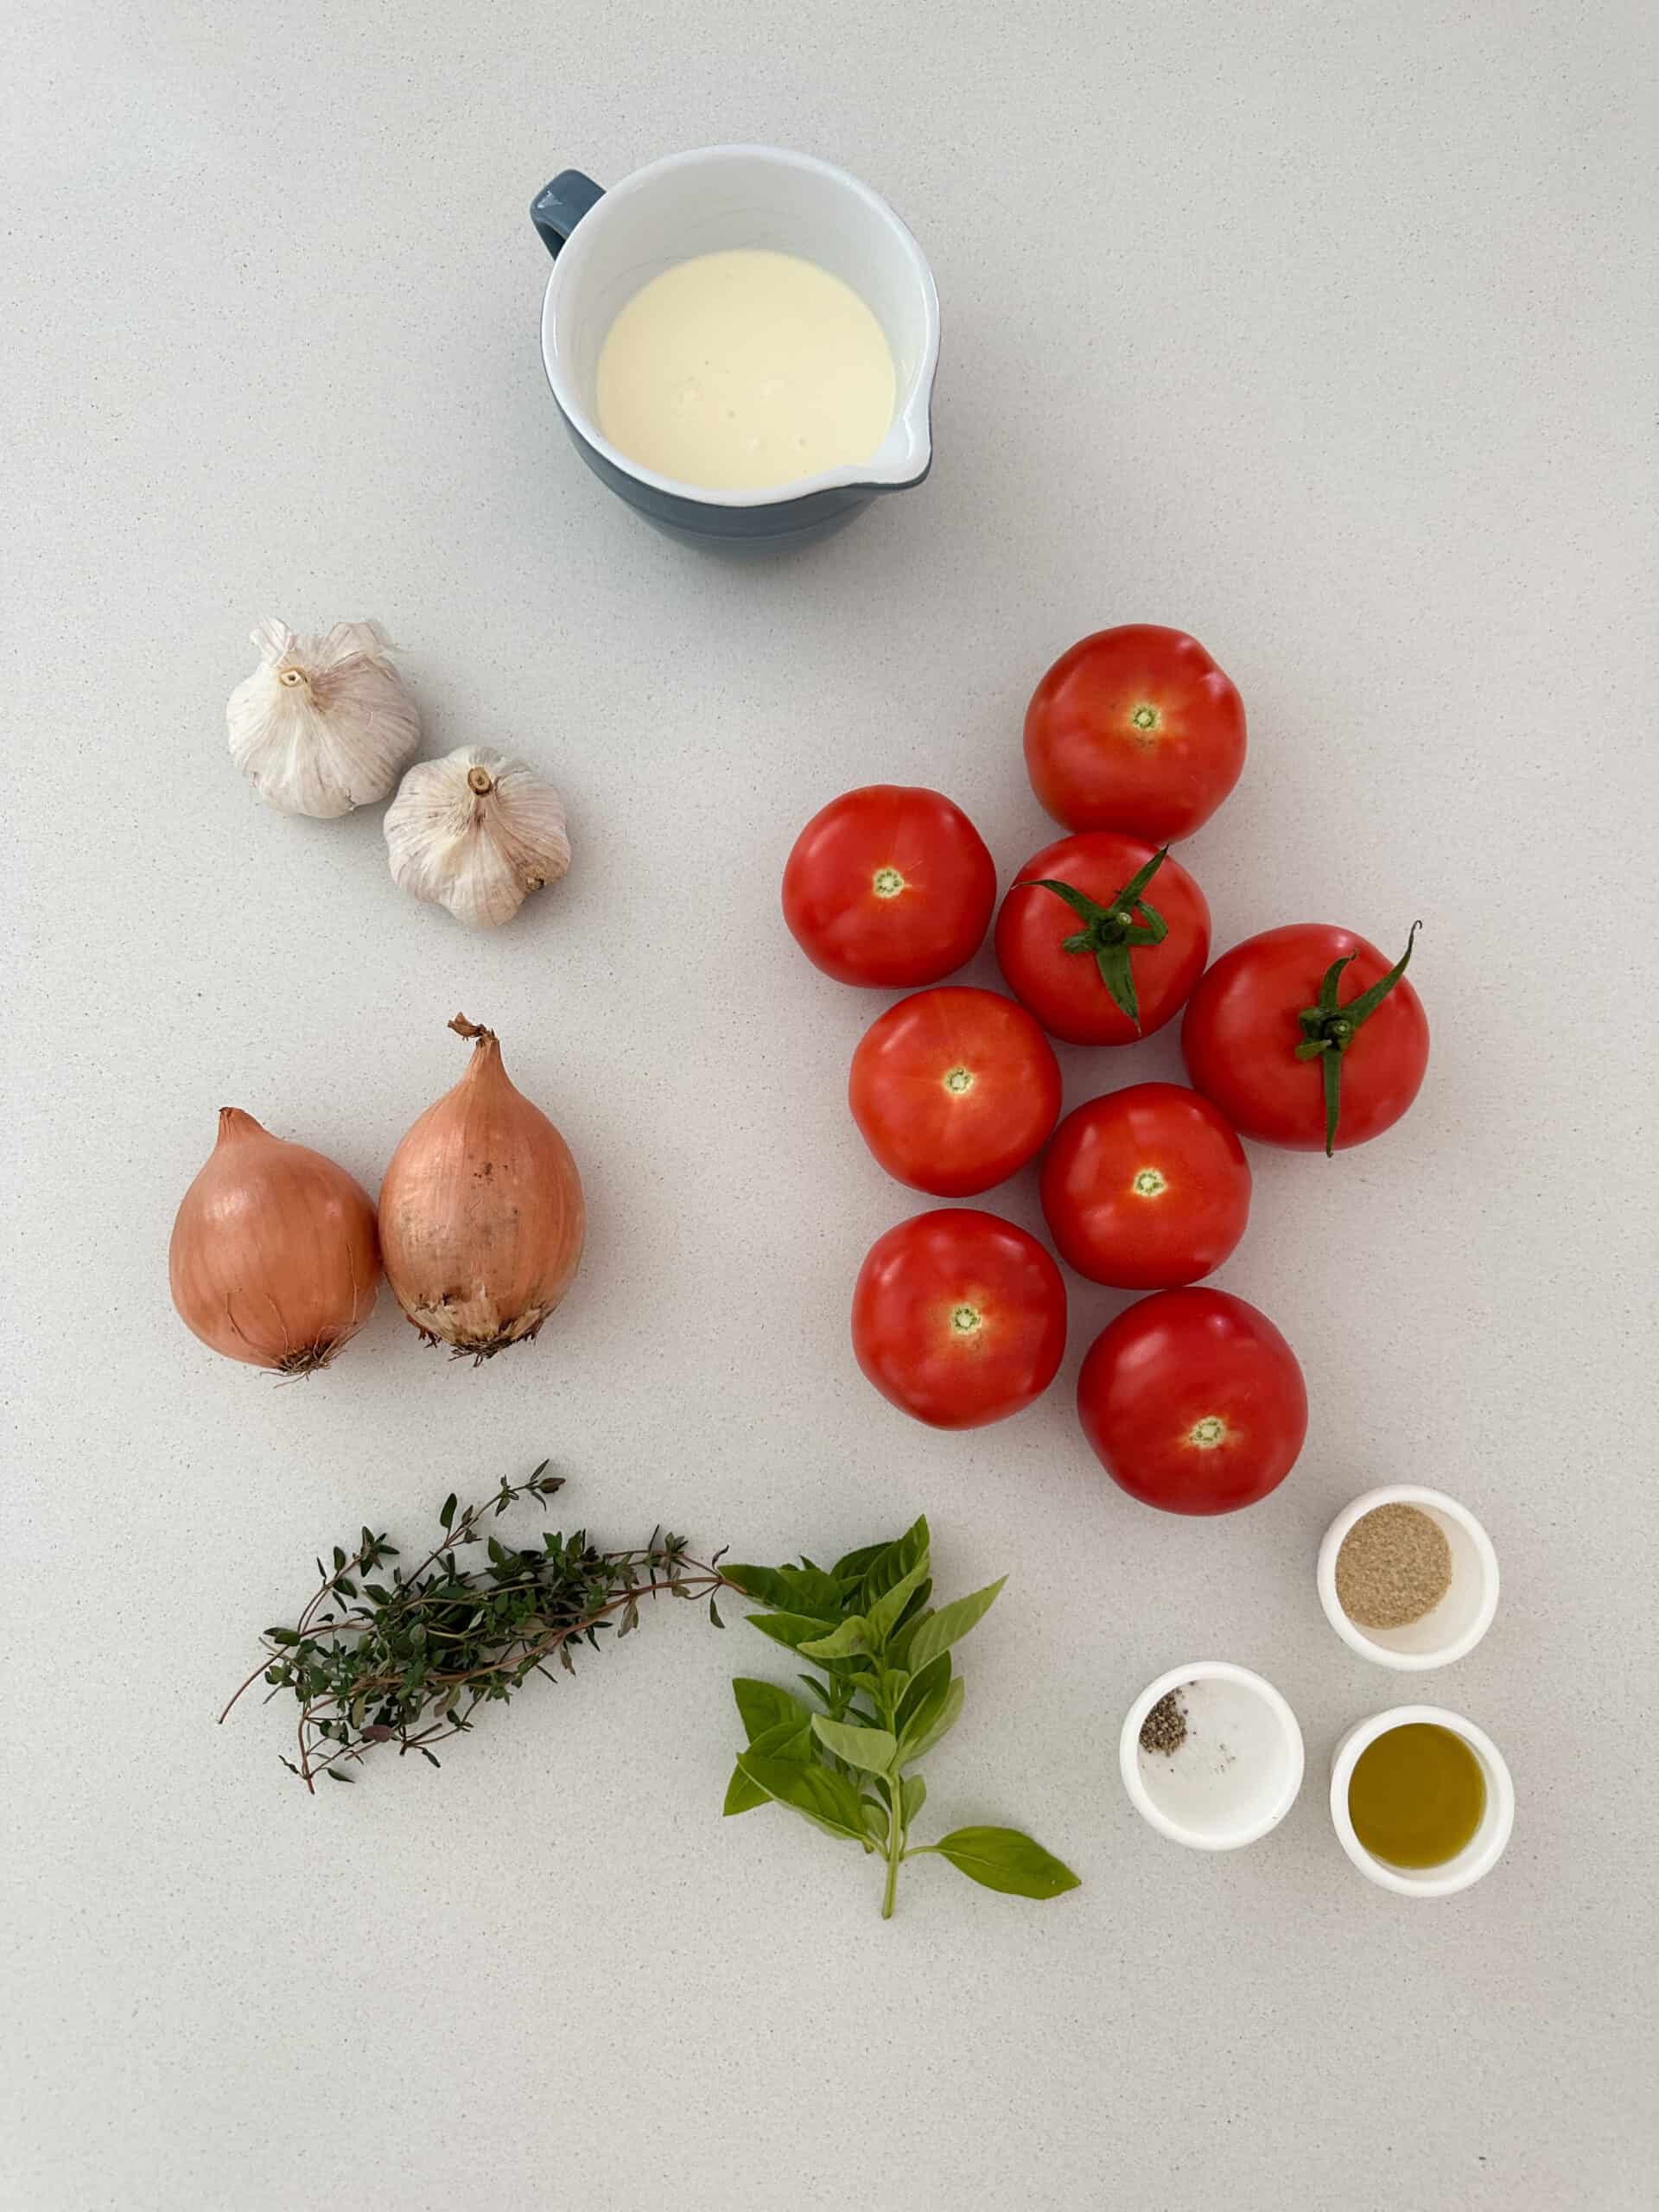 Easy Tomato Soup Recipe Ingredients